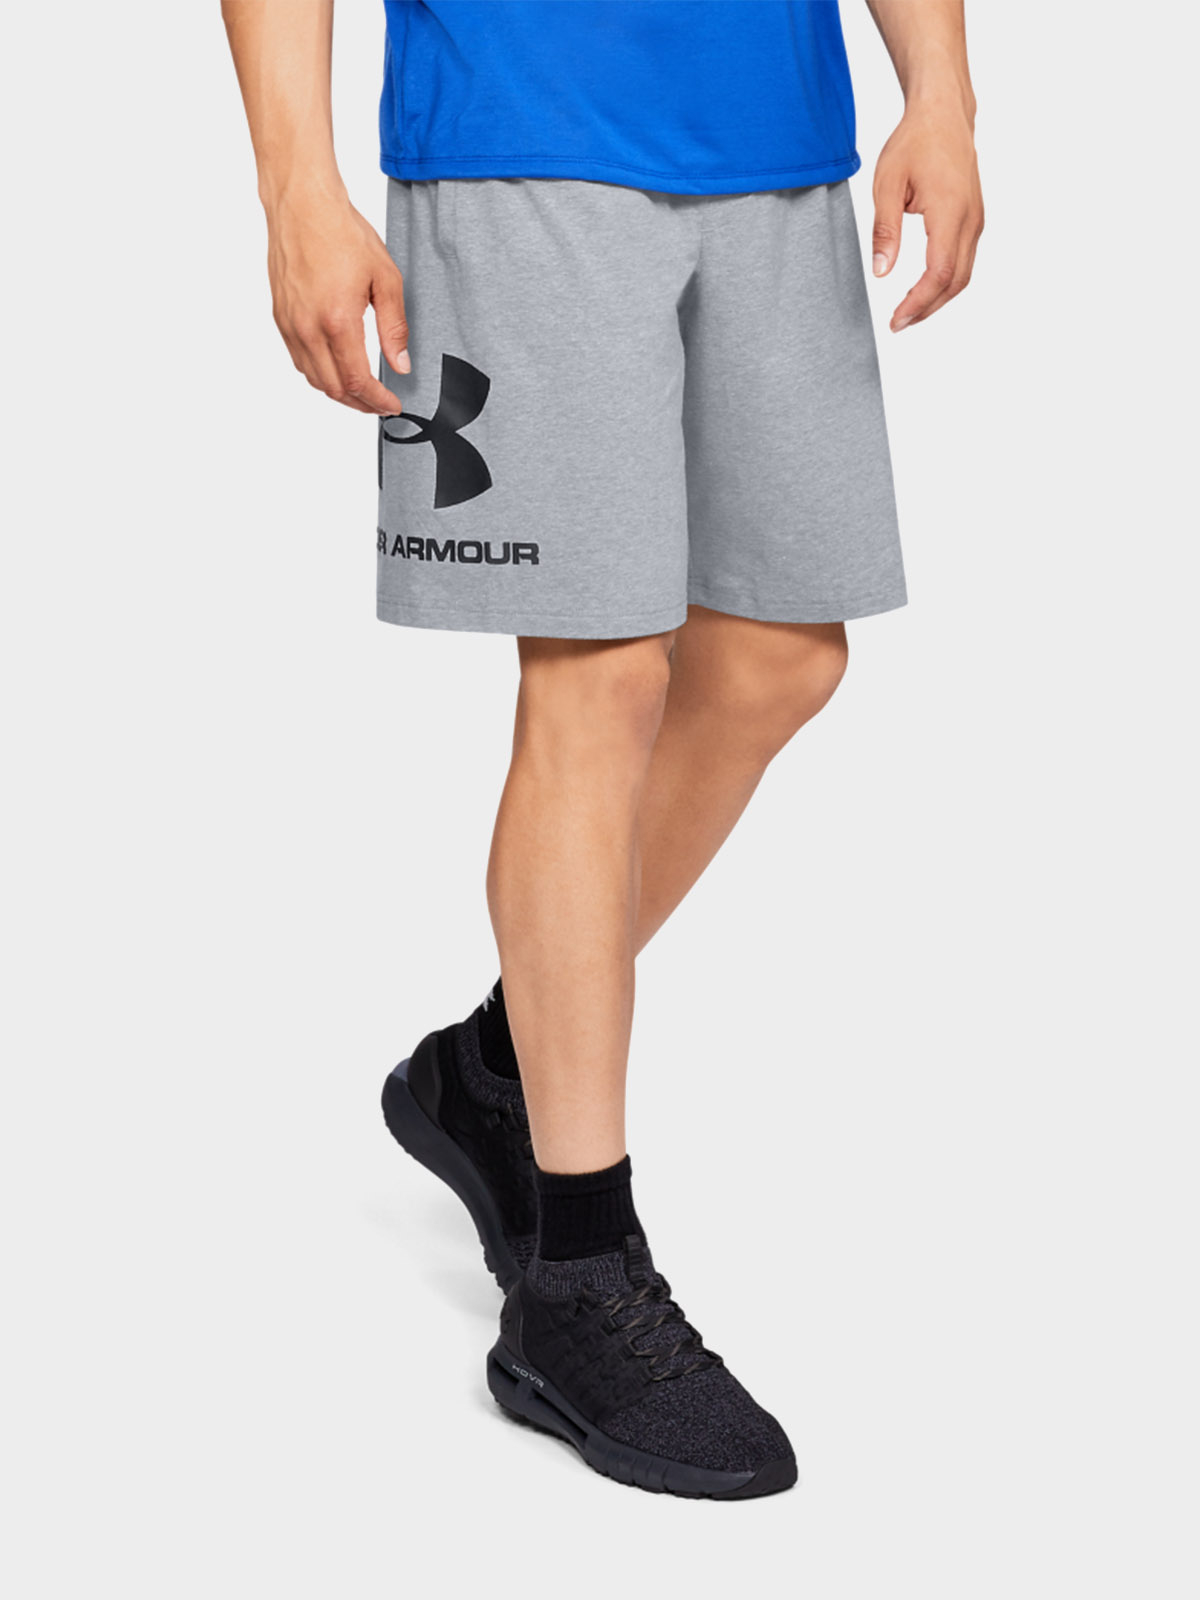 Under Armour Men's Omuno Sweat Shorts Grey XL